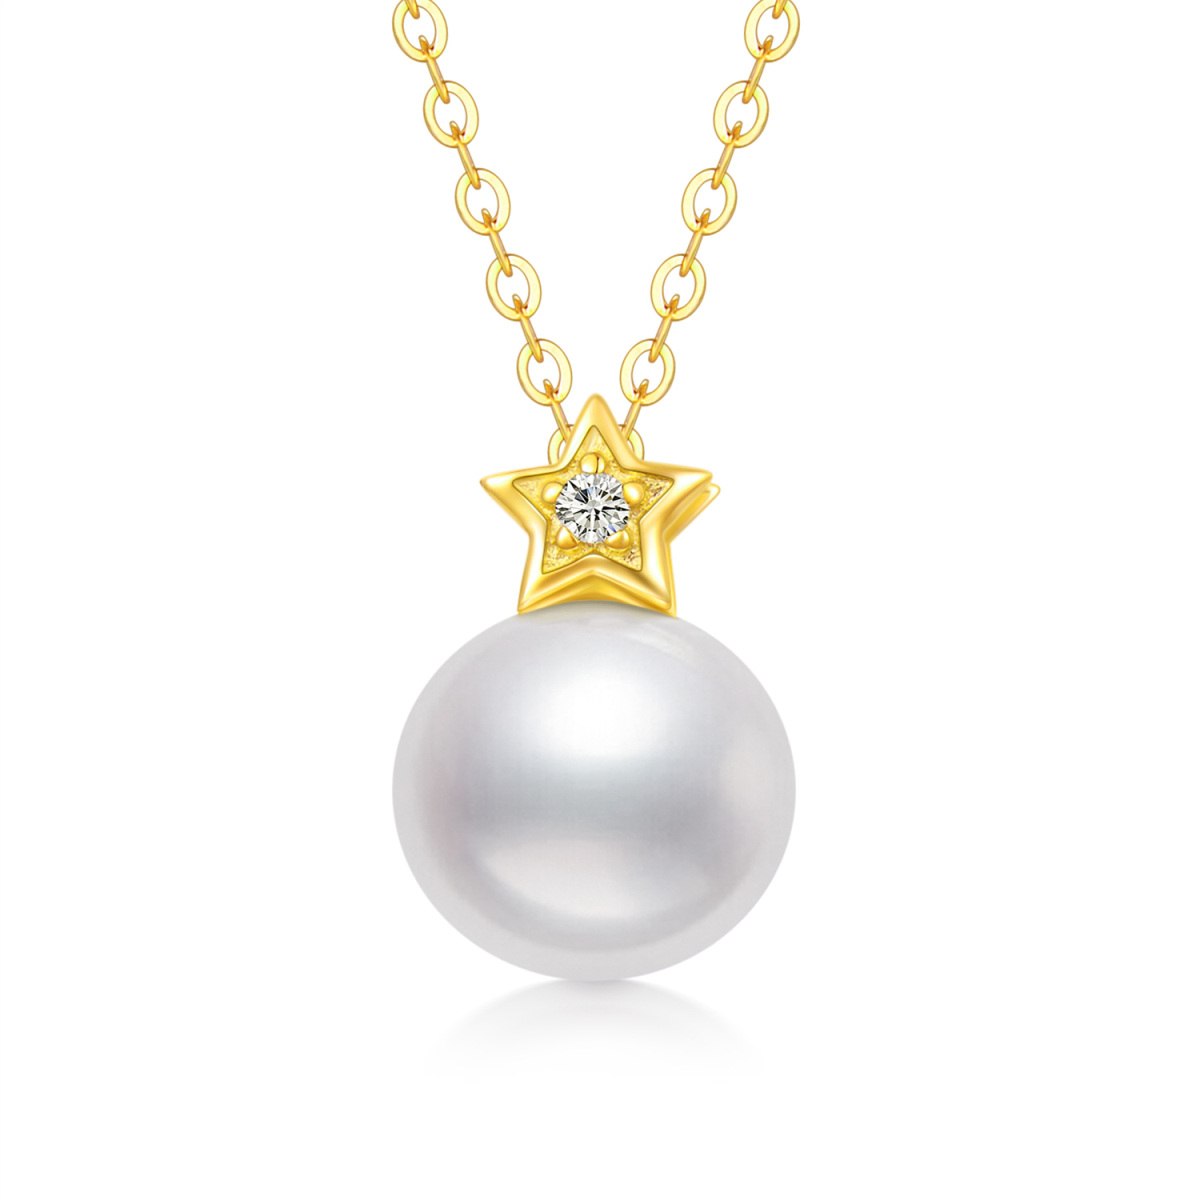 Collier en or 14K avec pendentif étoile en forme de perle circulaire-1